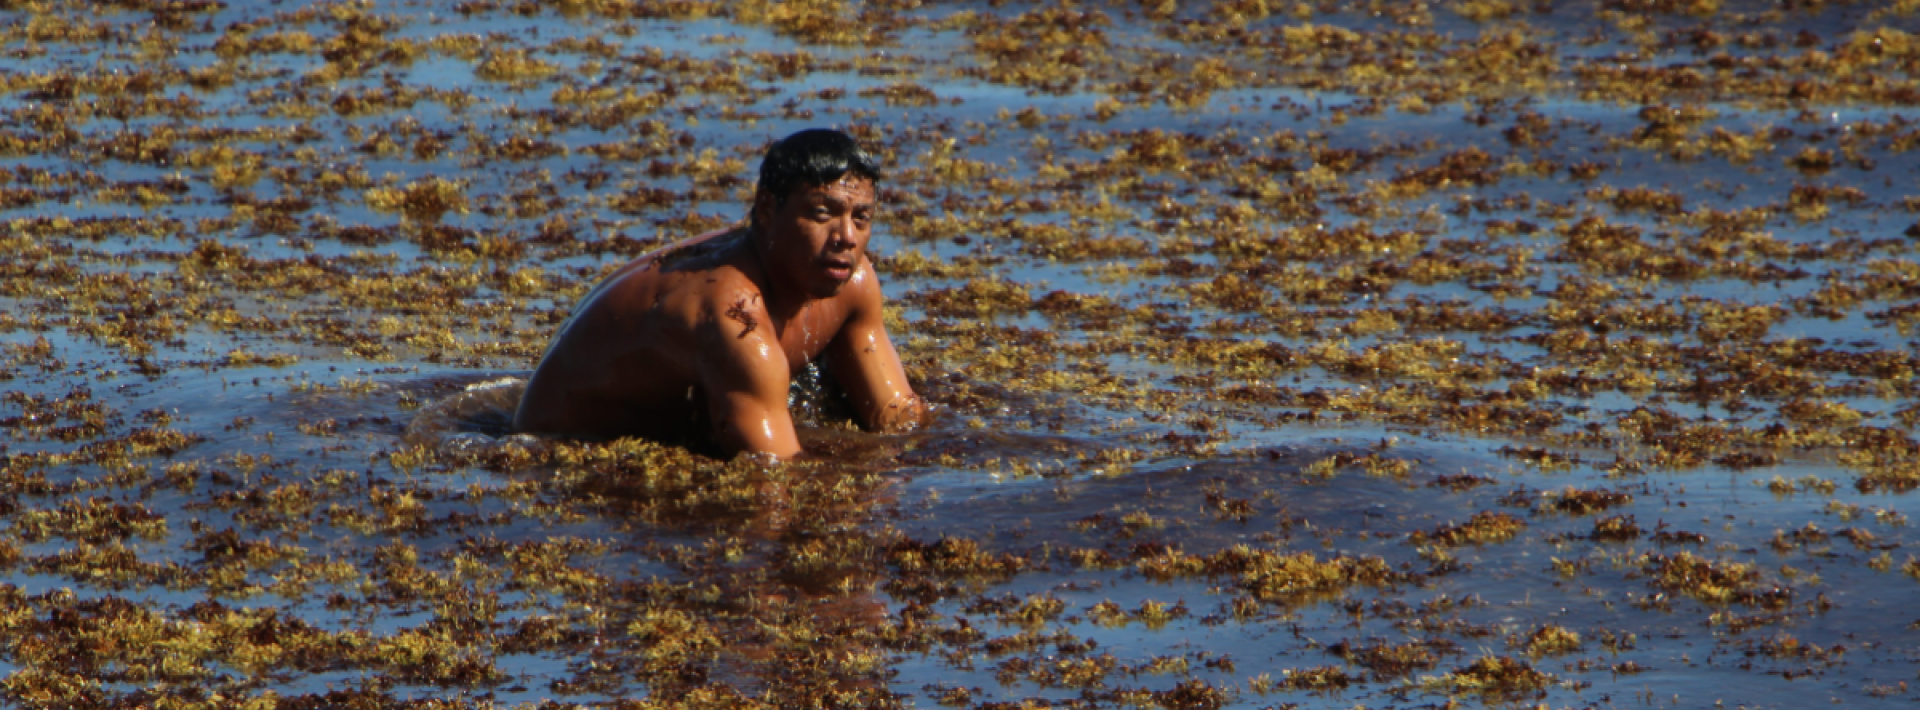 Man swimming in sargassum